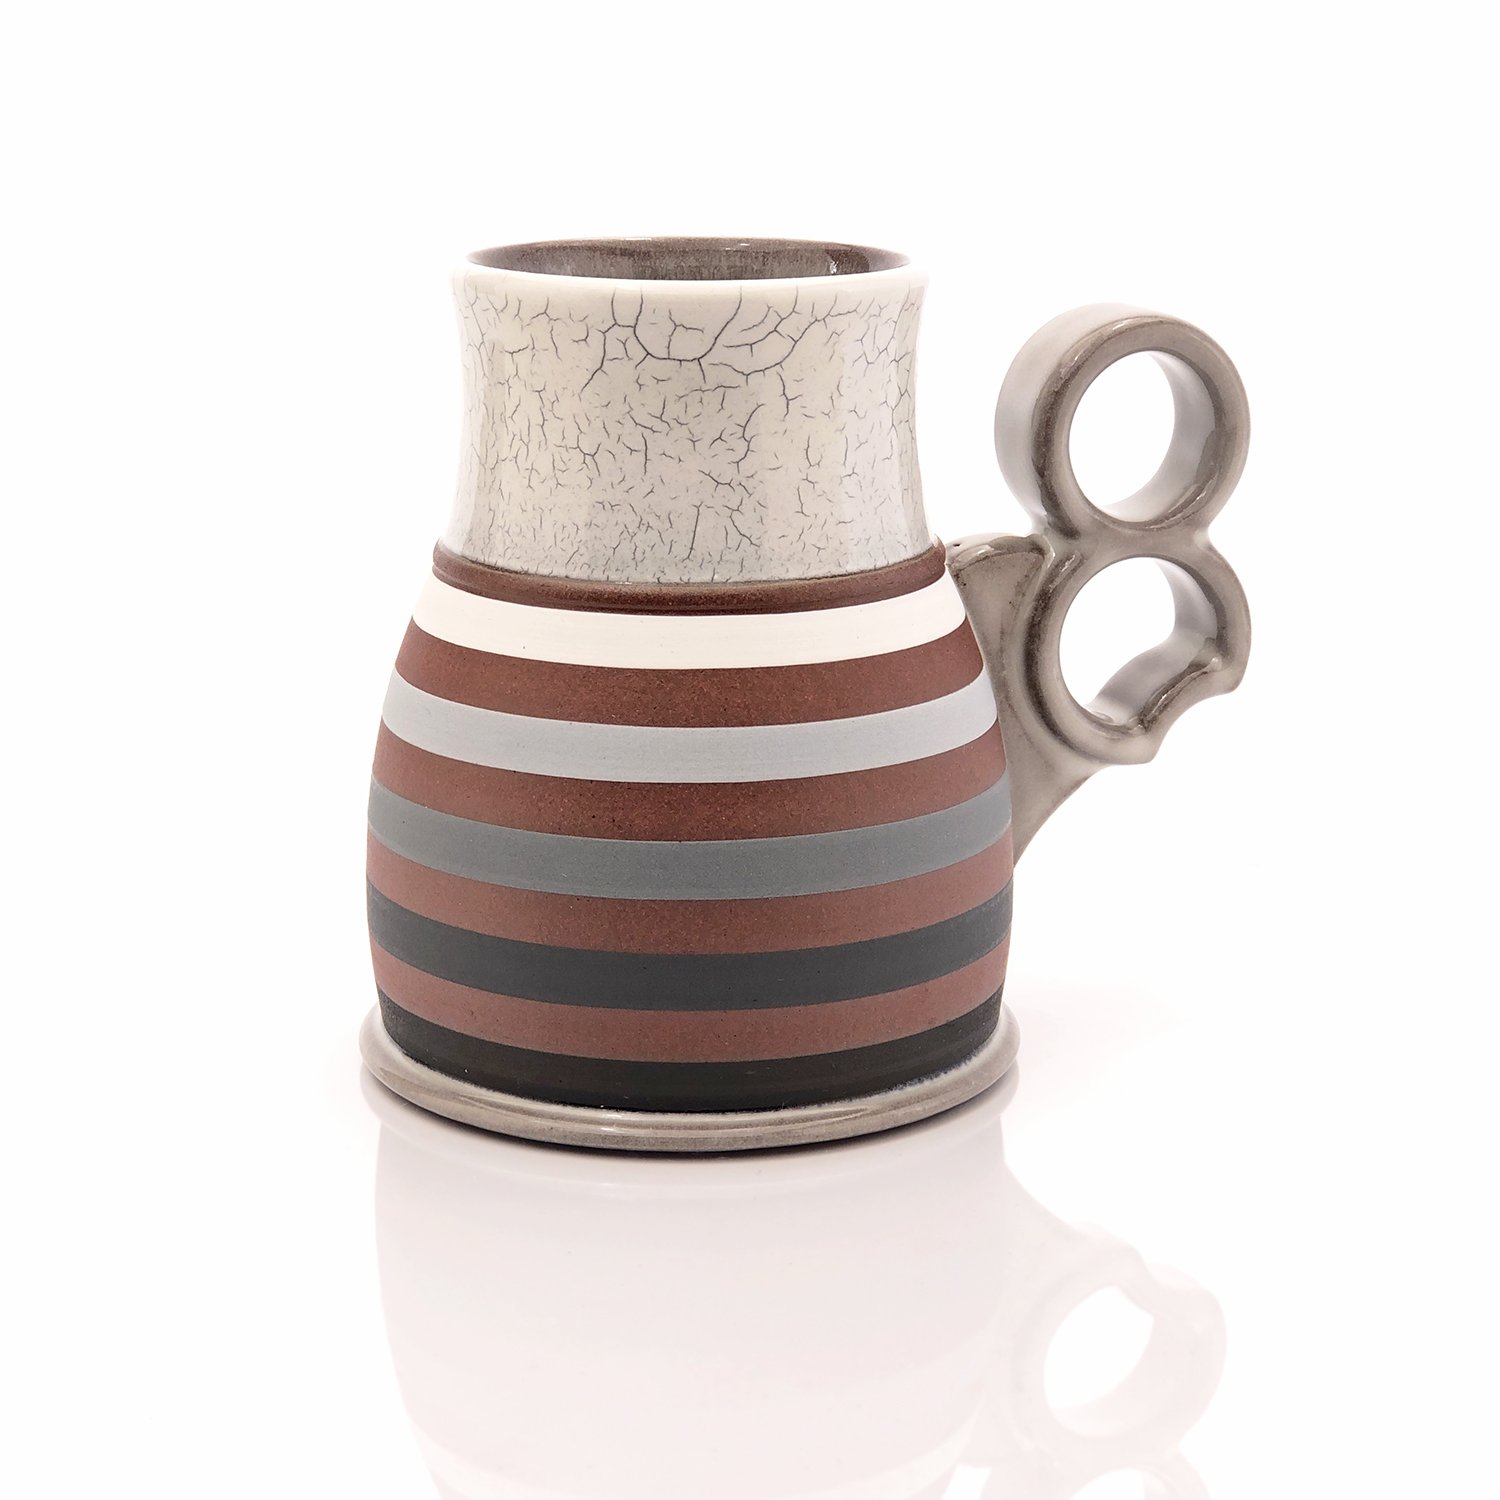 Greyscale "Beaker" mug